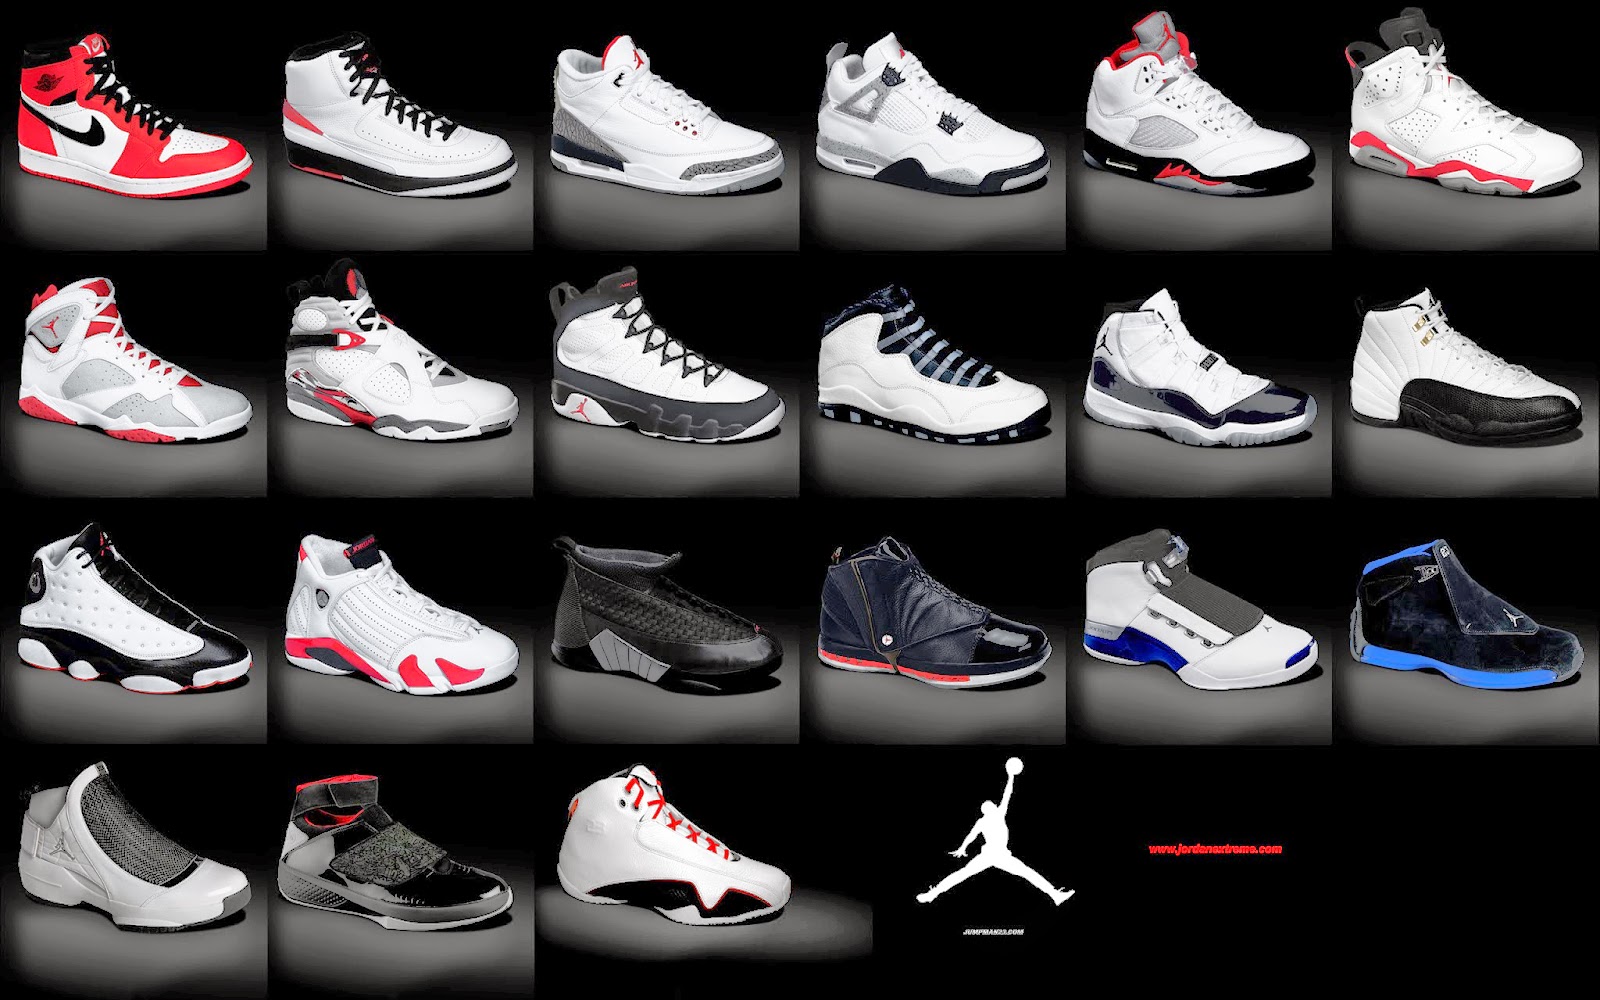 all jordan shoes 1-23